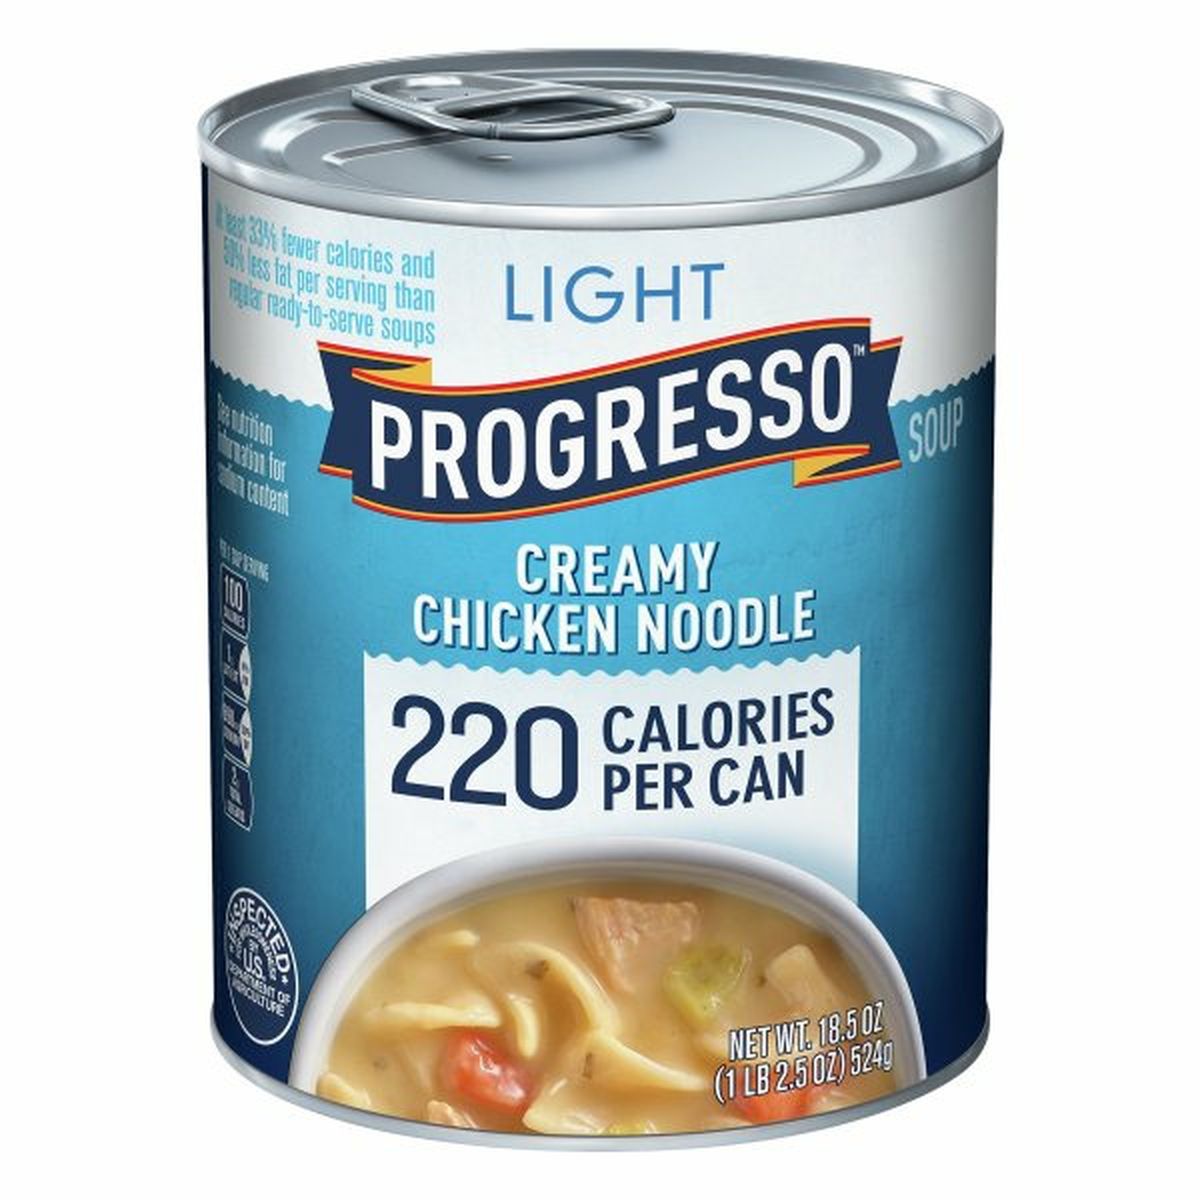 Calories in Progresso Soup, Light, Creamy Chicken Noodle